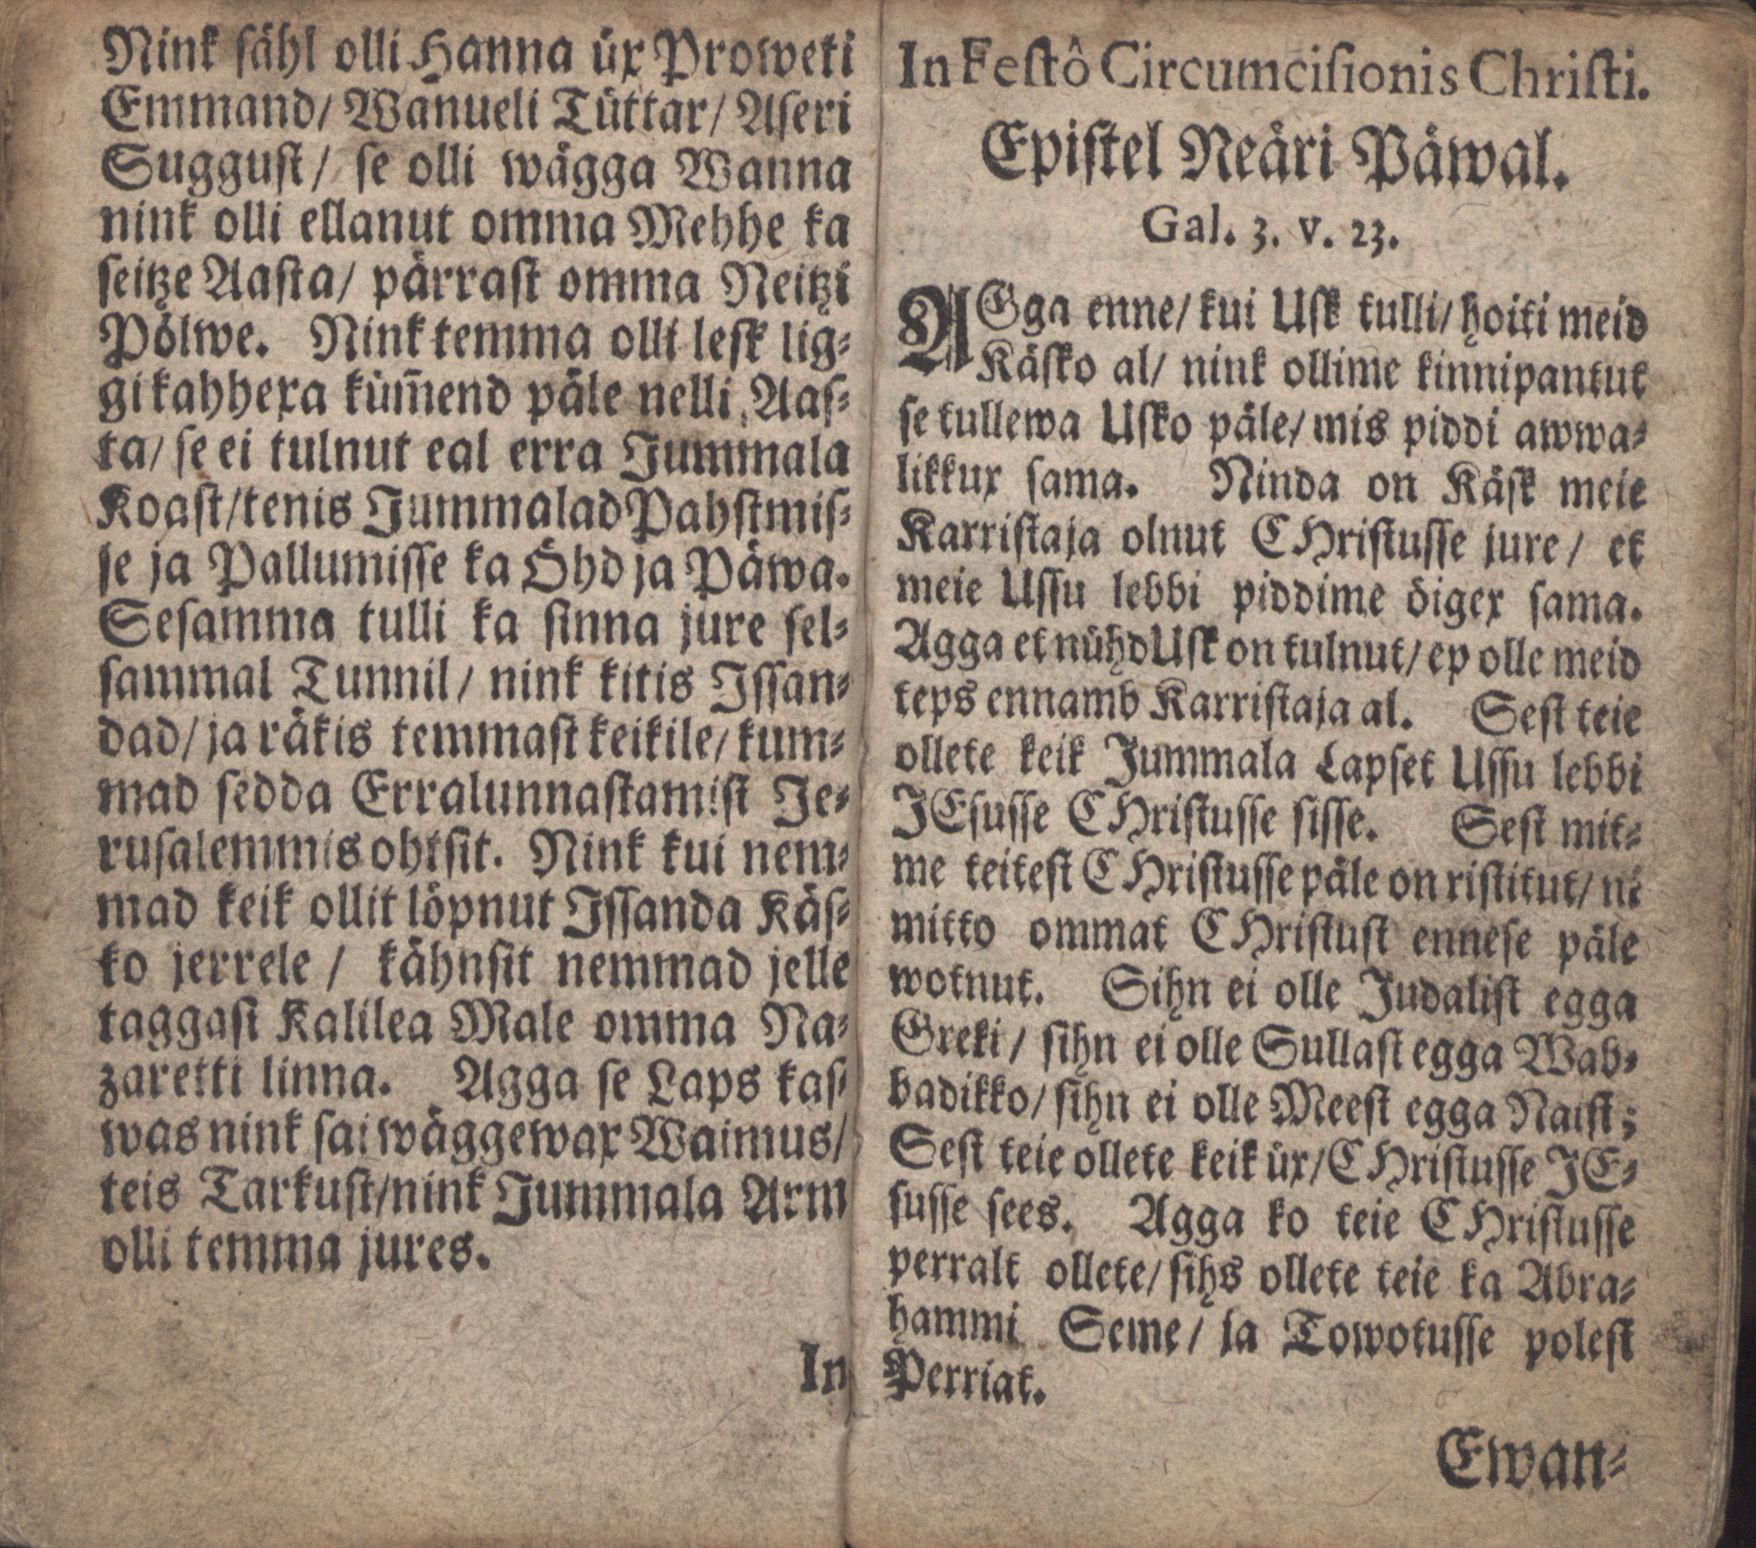 Ewangeliummit Nink Epistlit (1700) | 11. Main body of text